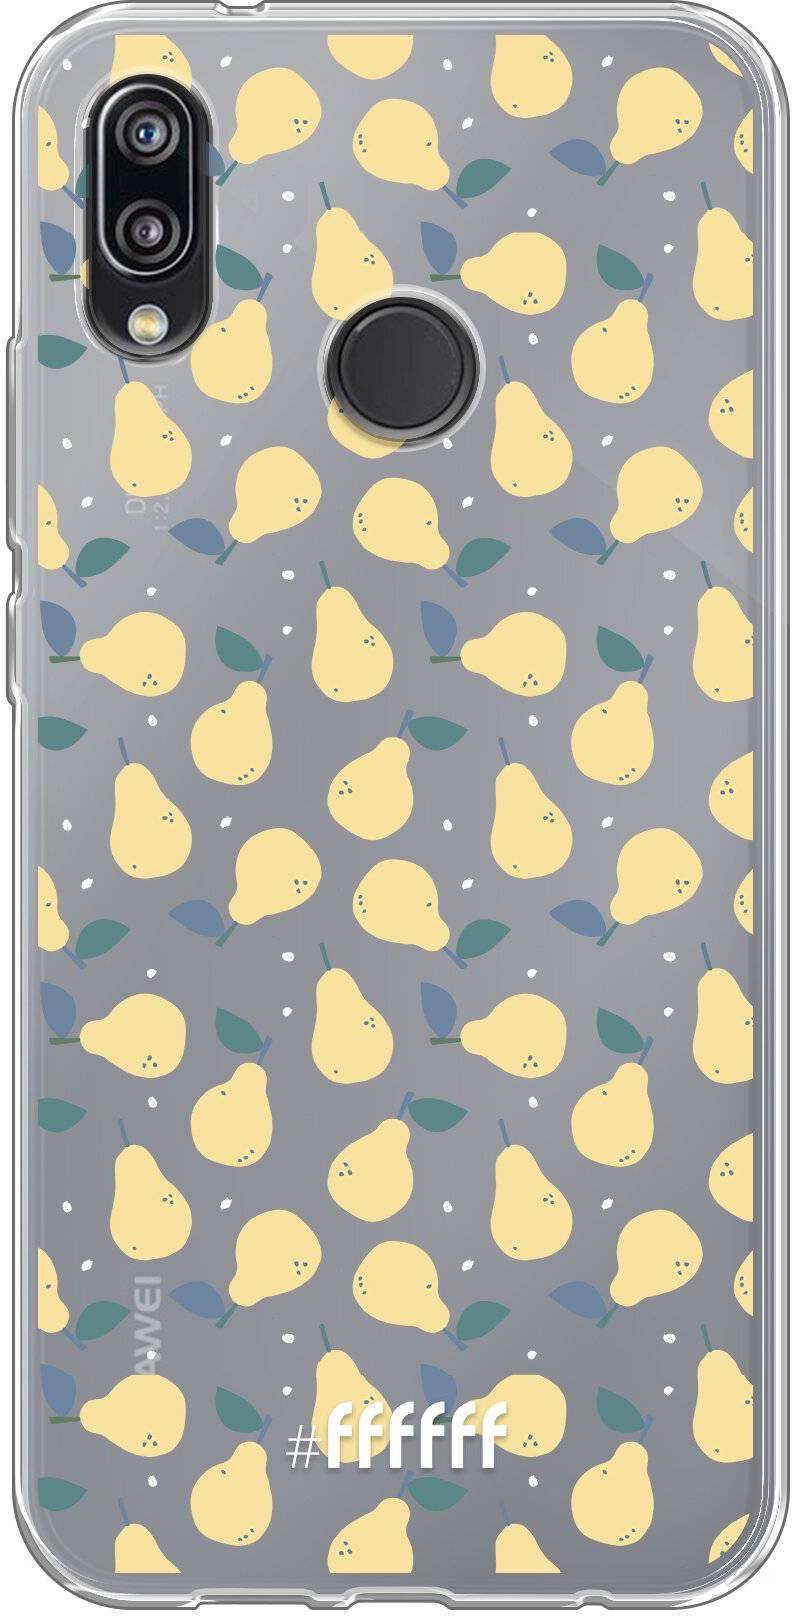 Pears P20 Lite (2018)